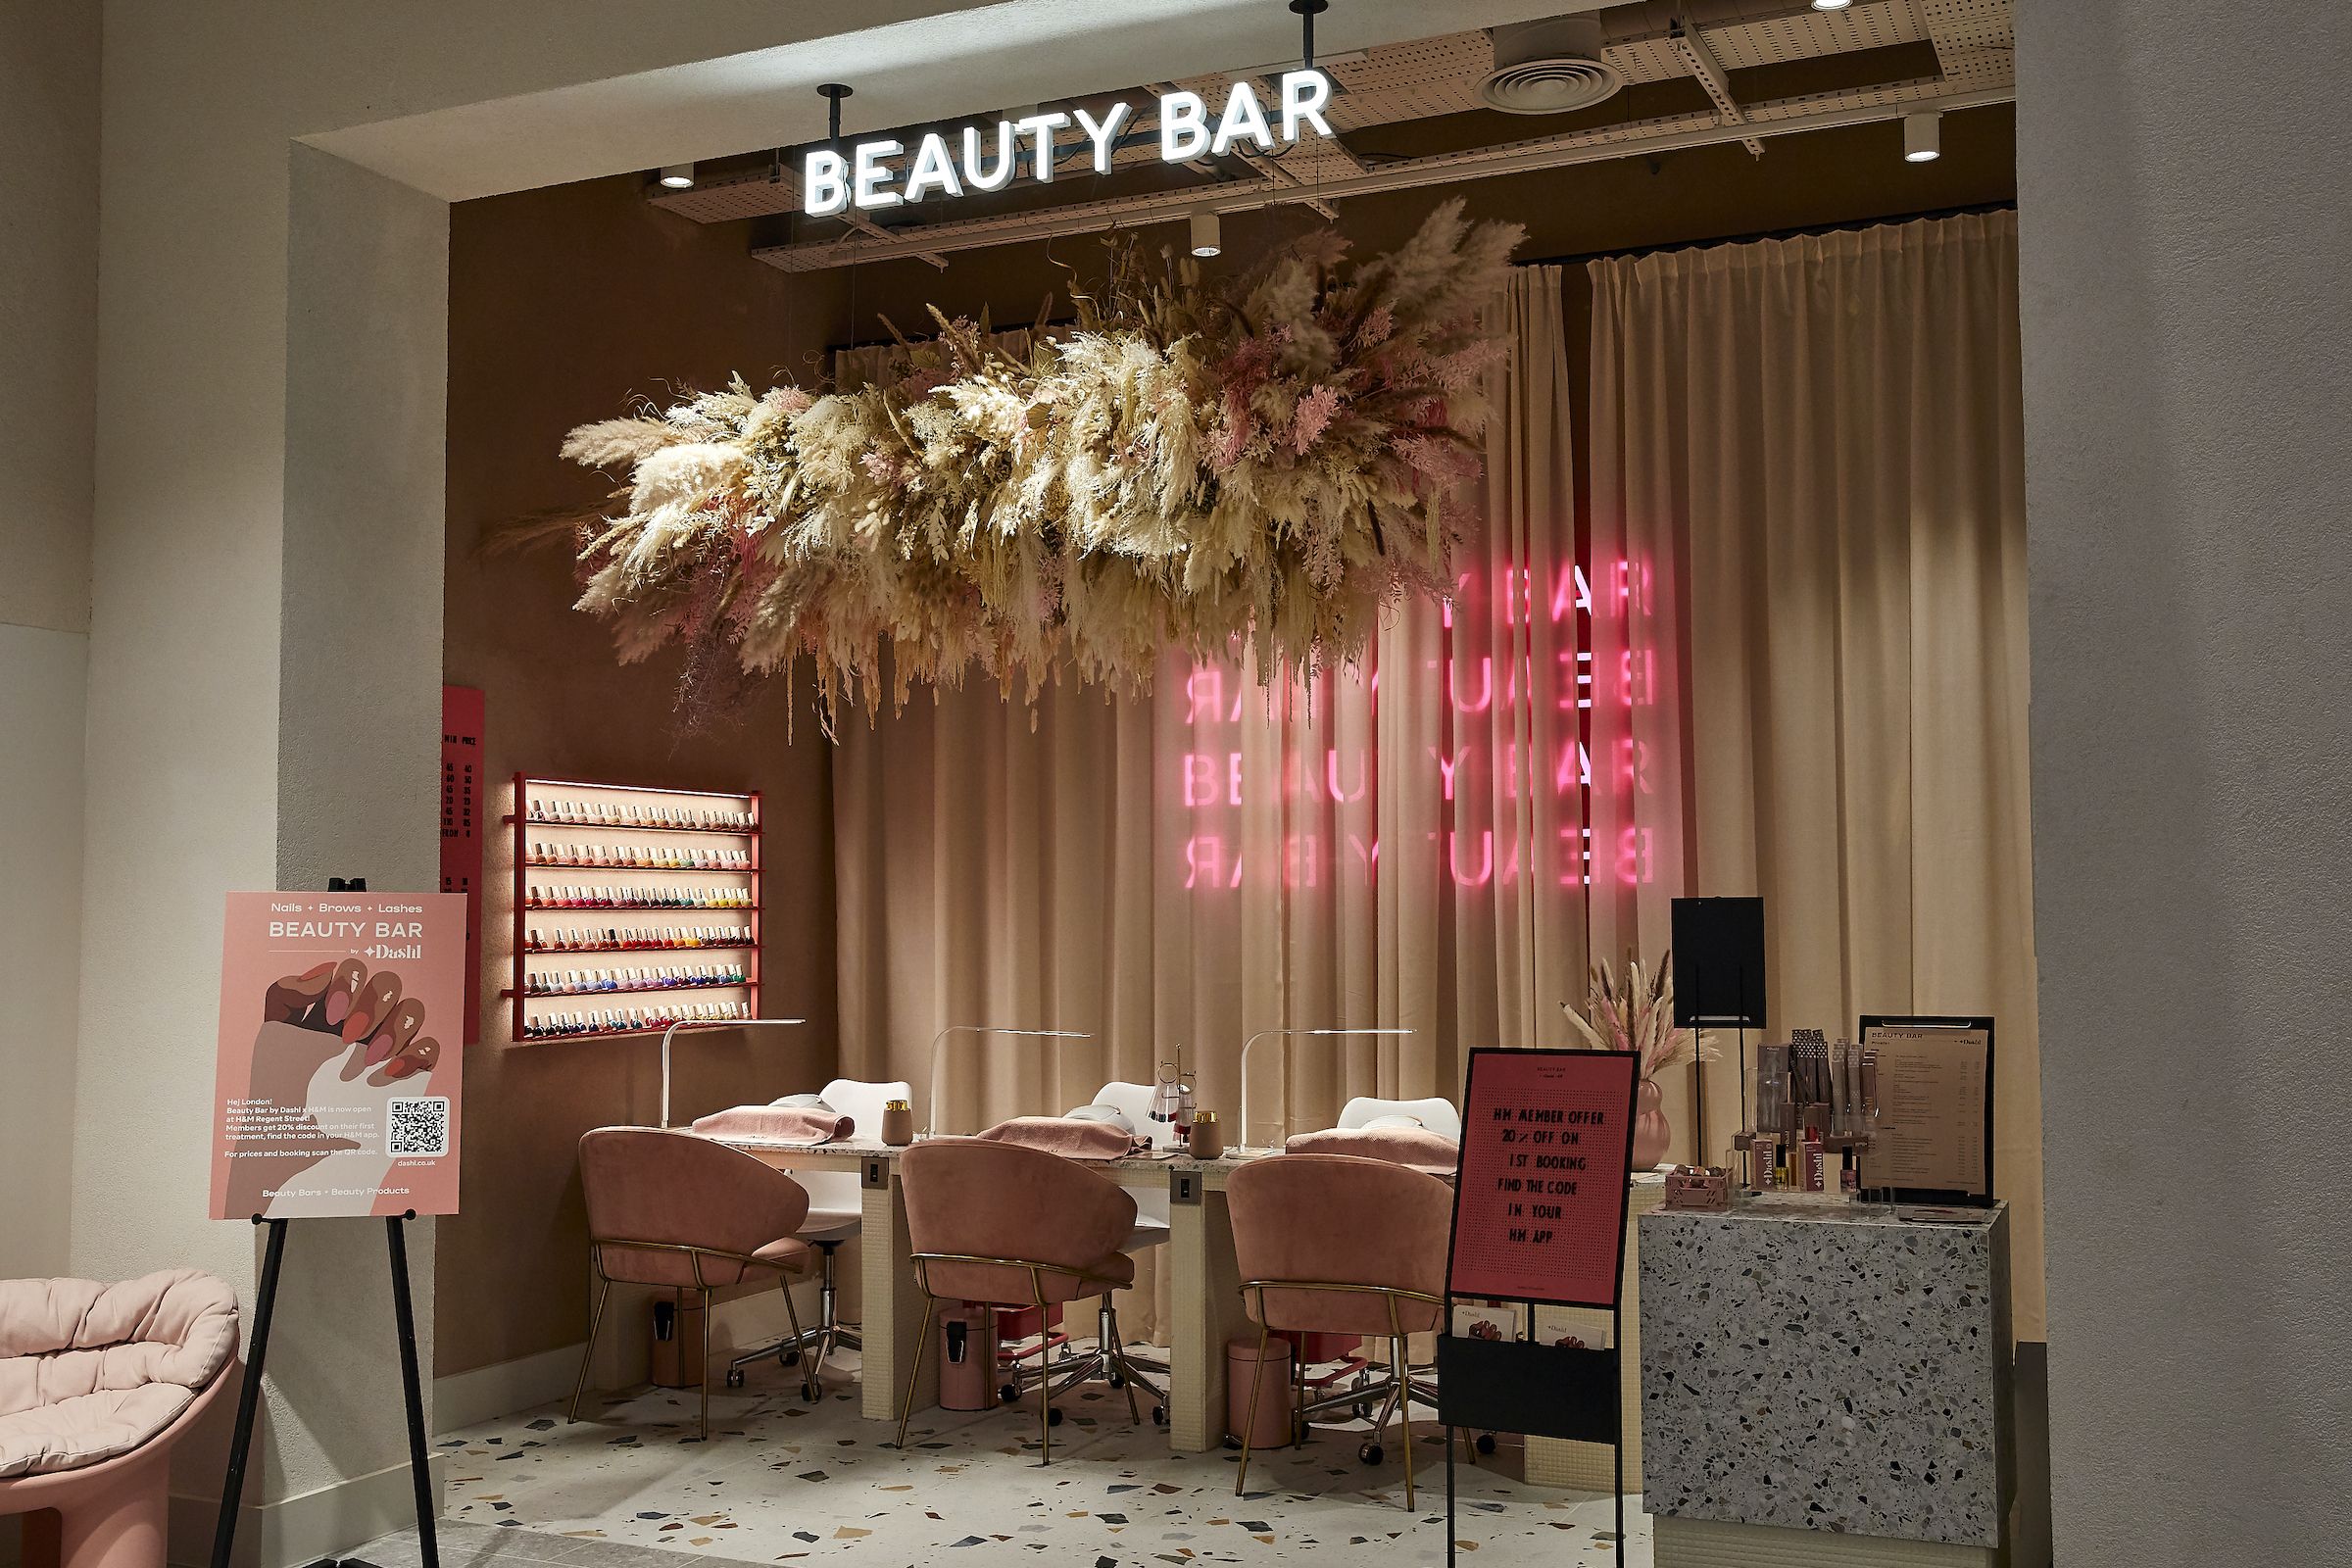 Beauty Bar by Dashl – Brow bars